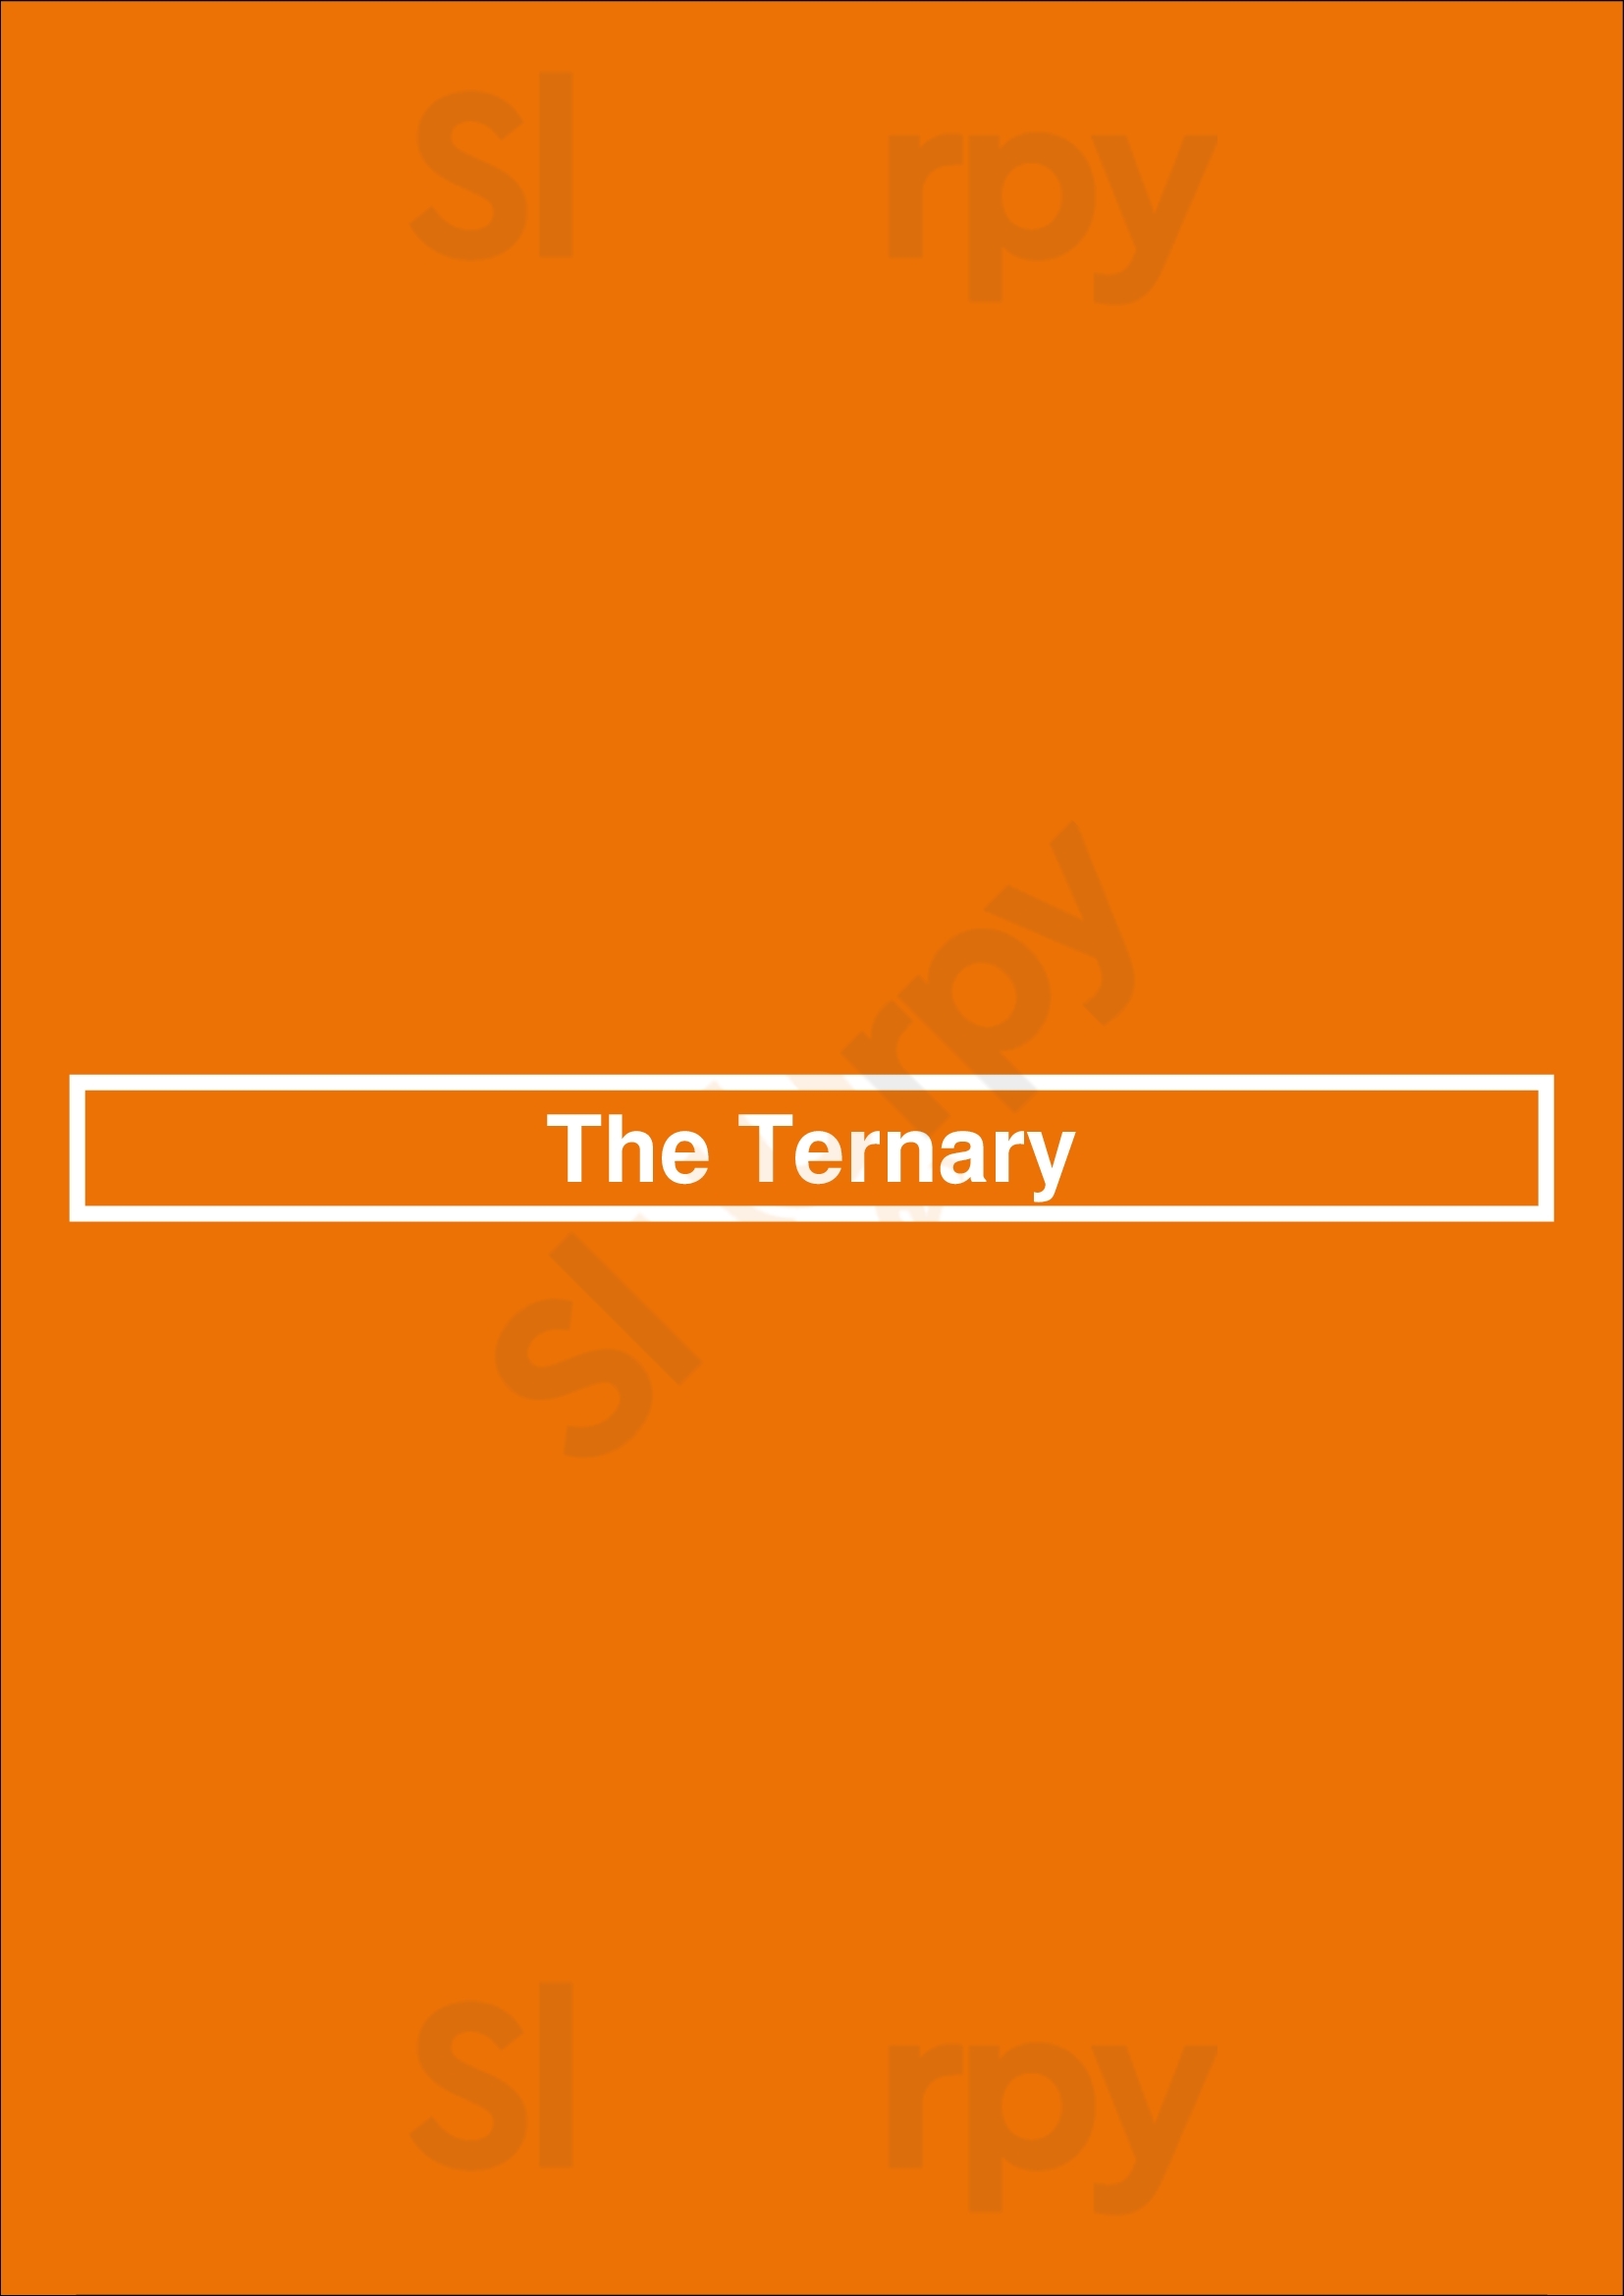 The Ternary Sydney Menu - 1